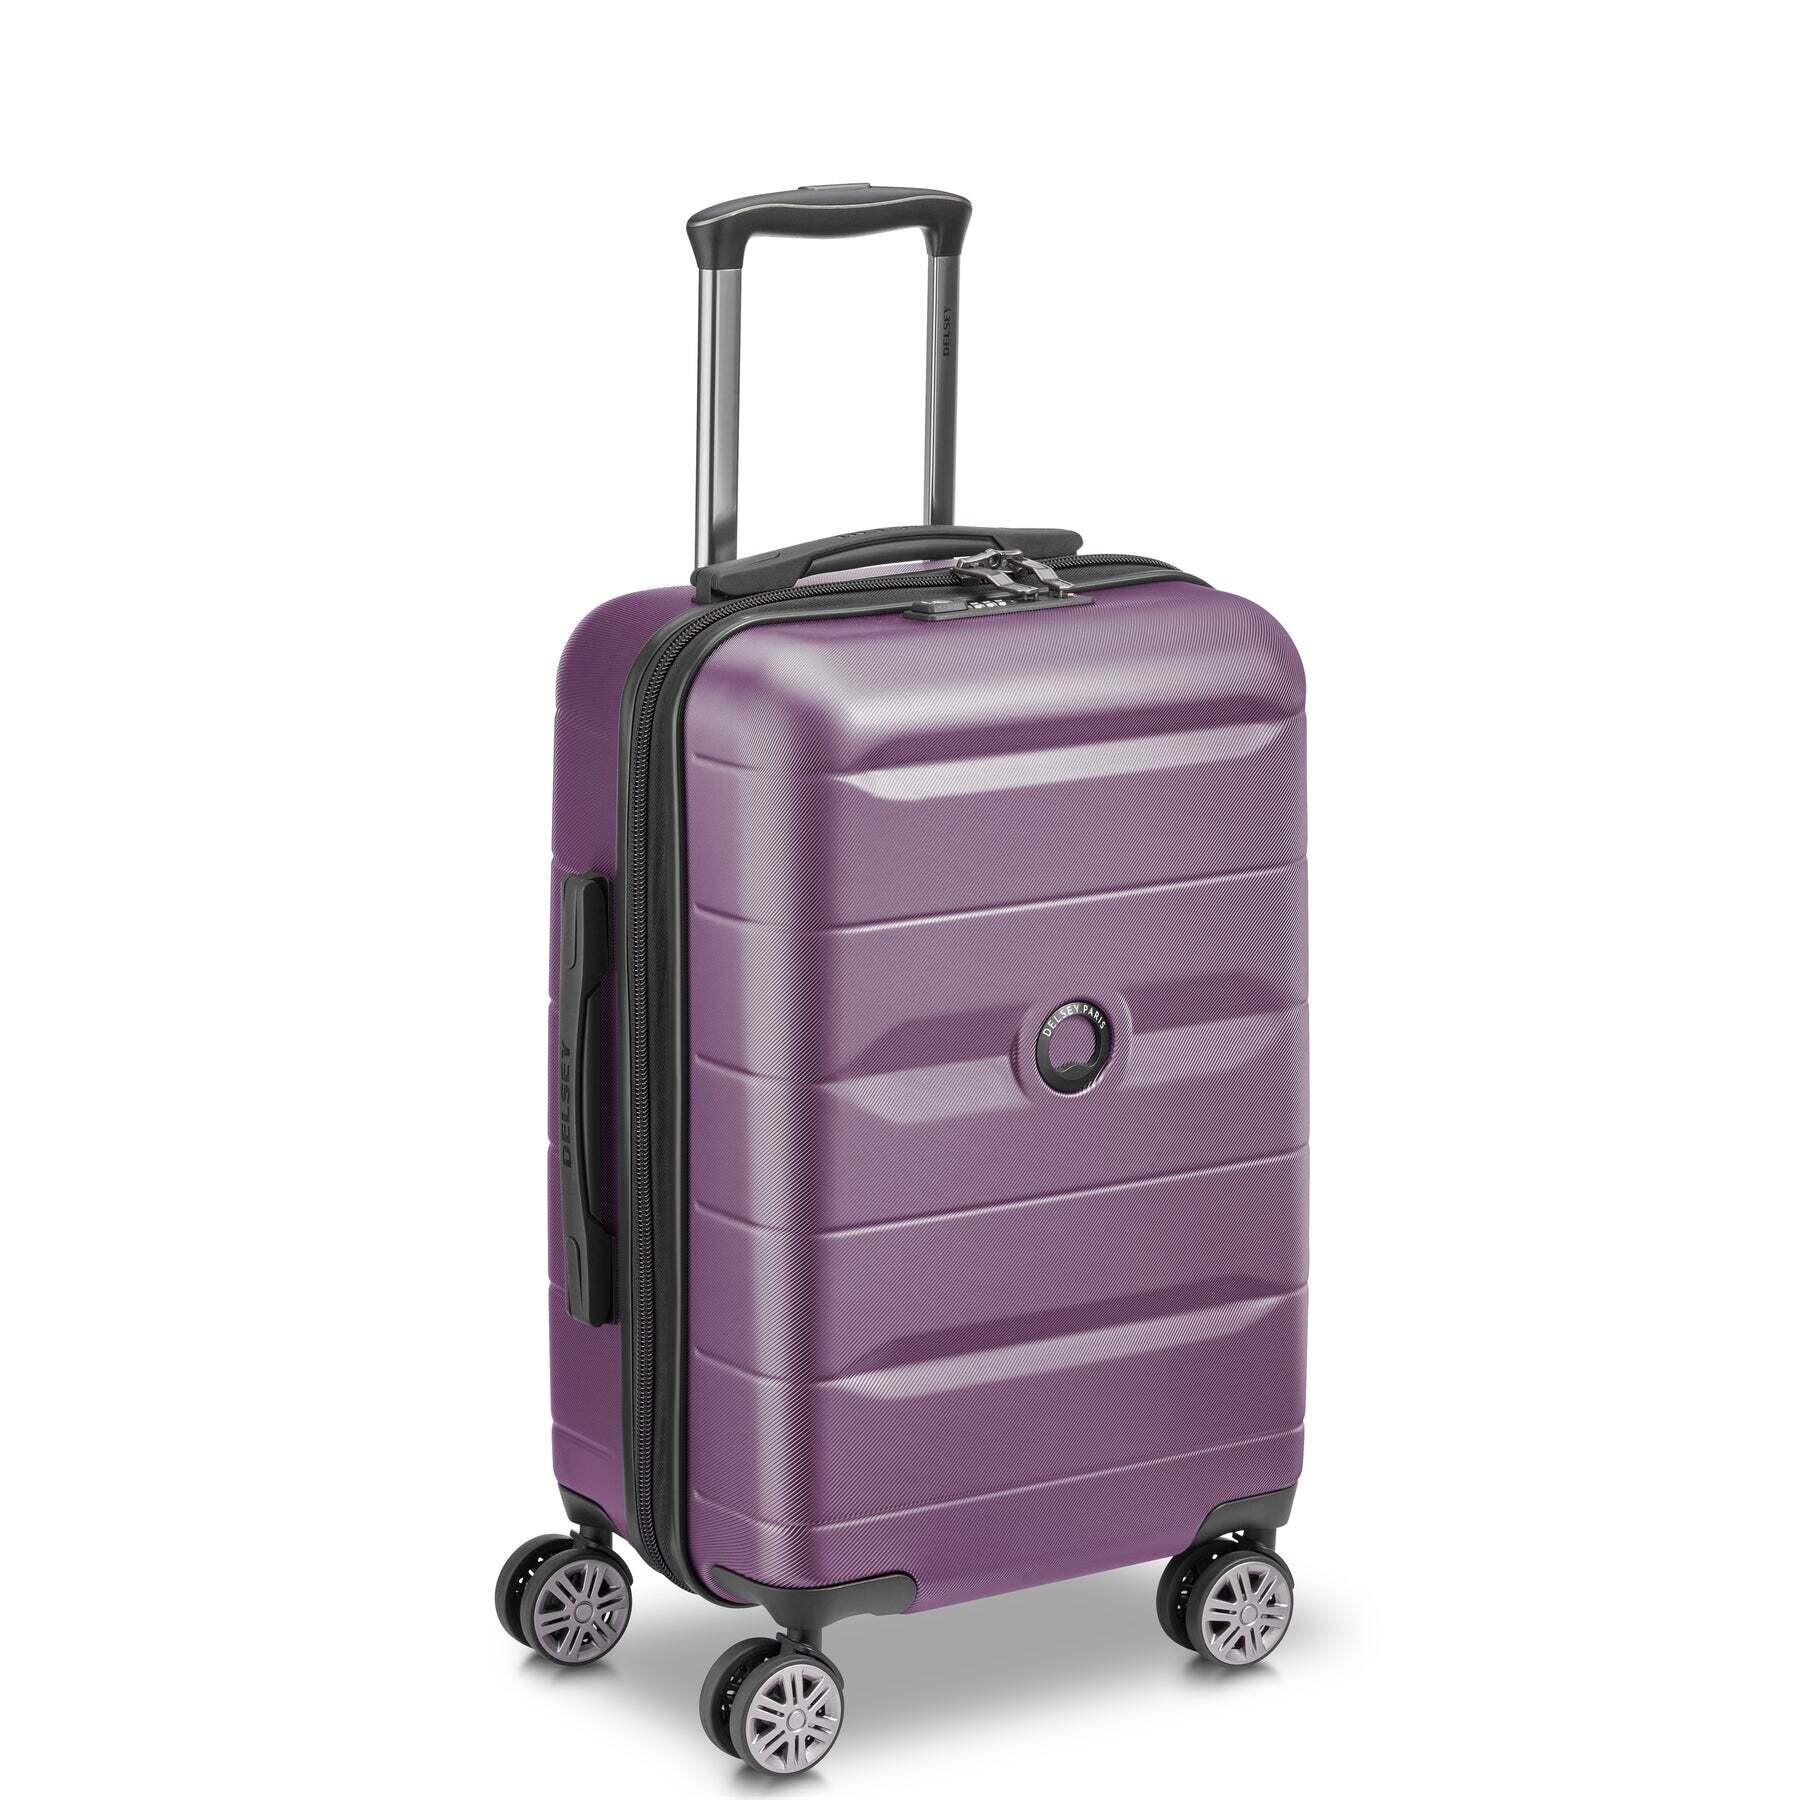 Carry-on suitcase 4 double wheels Delsey Comete 55 cm